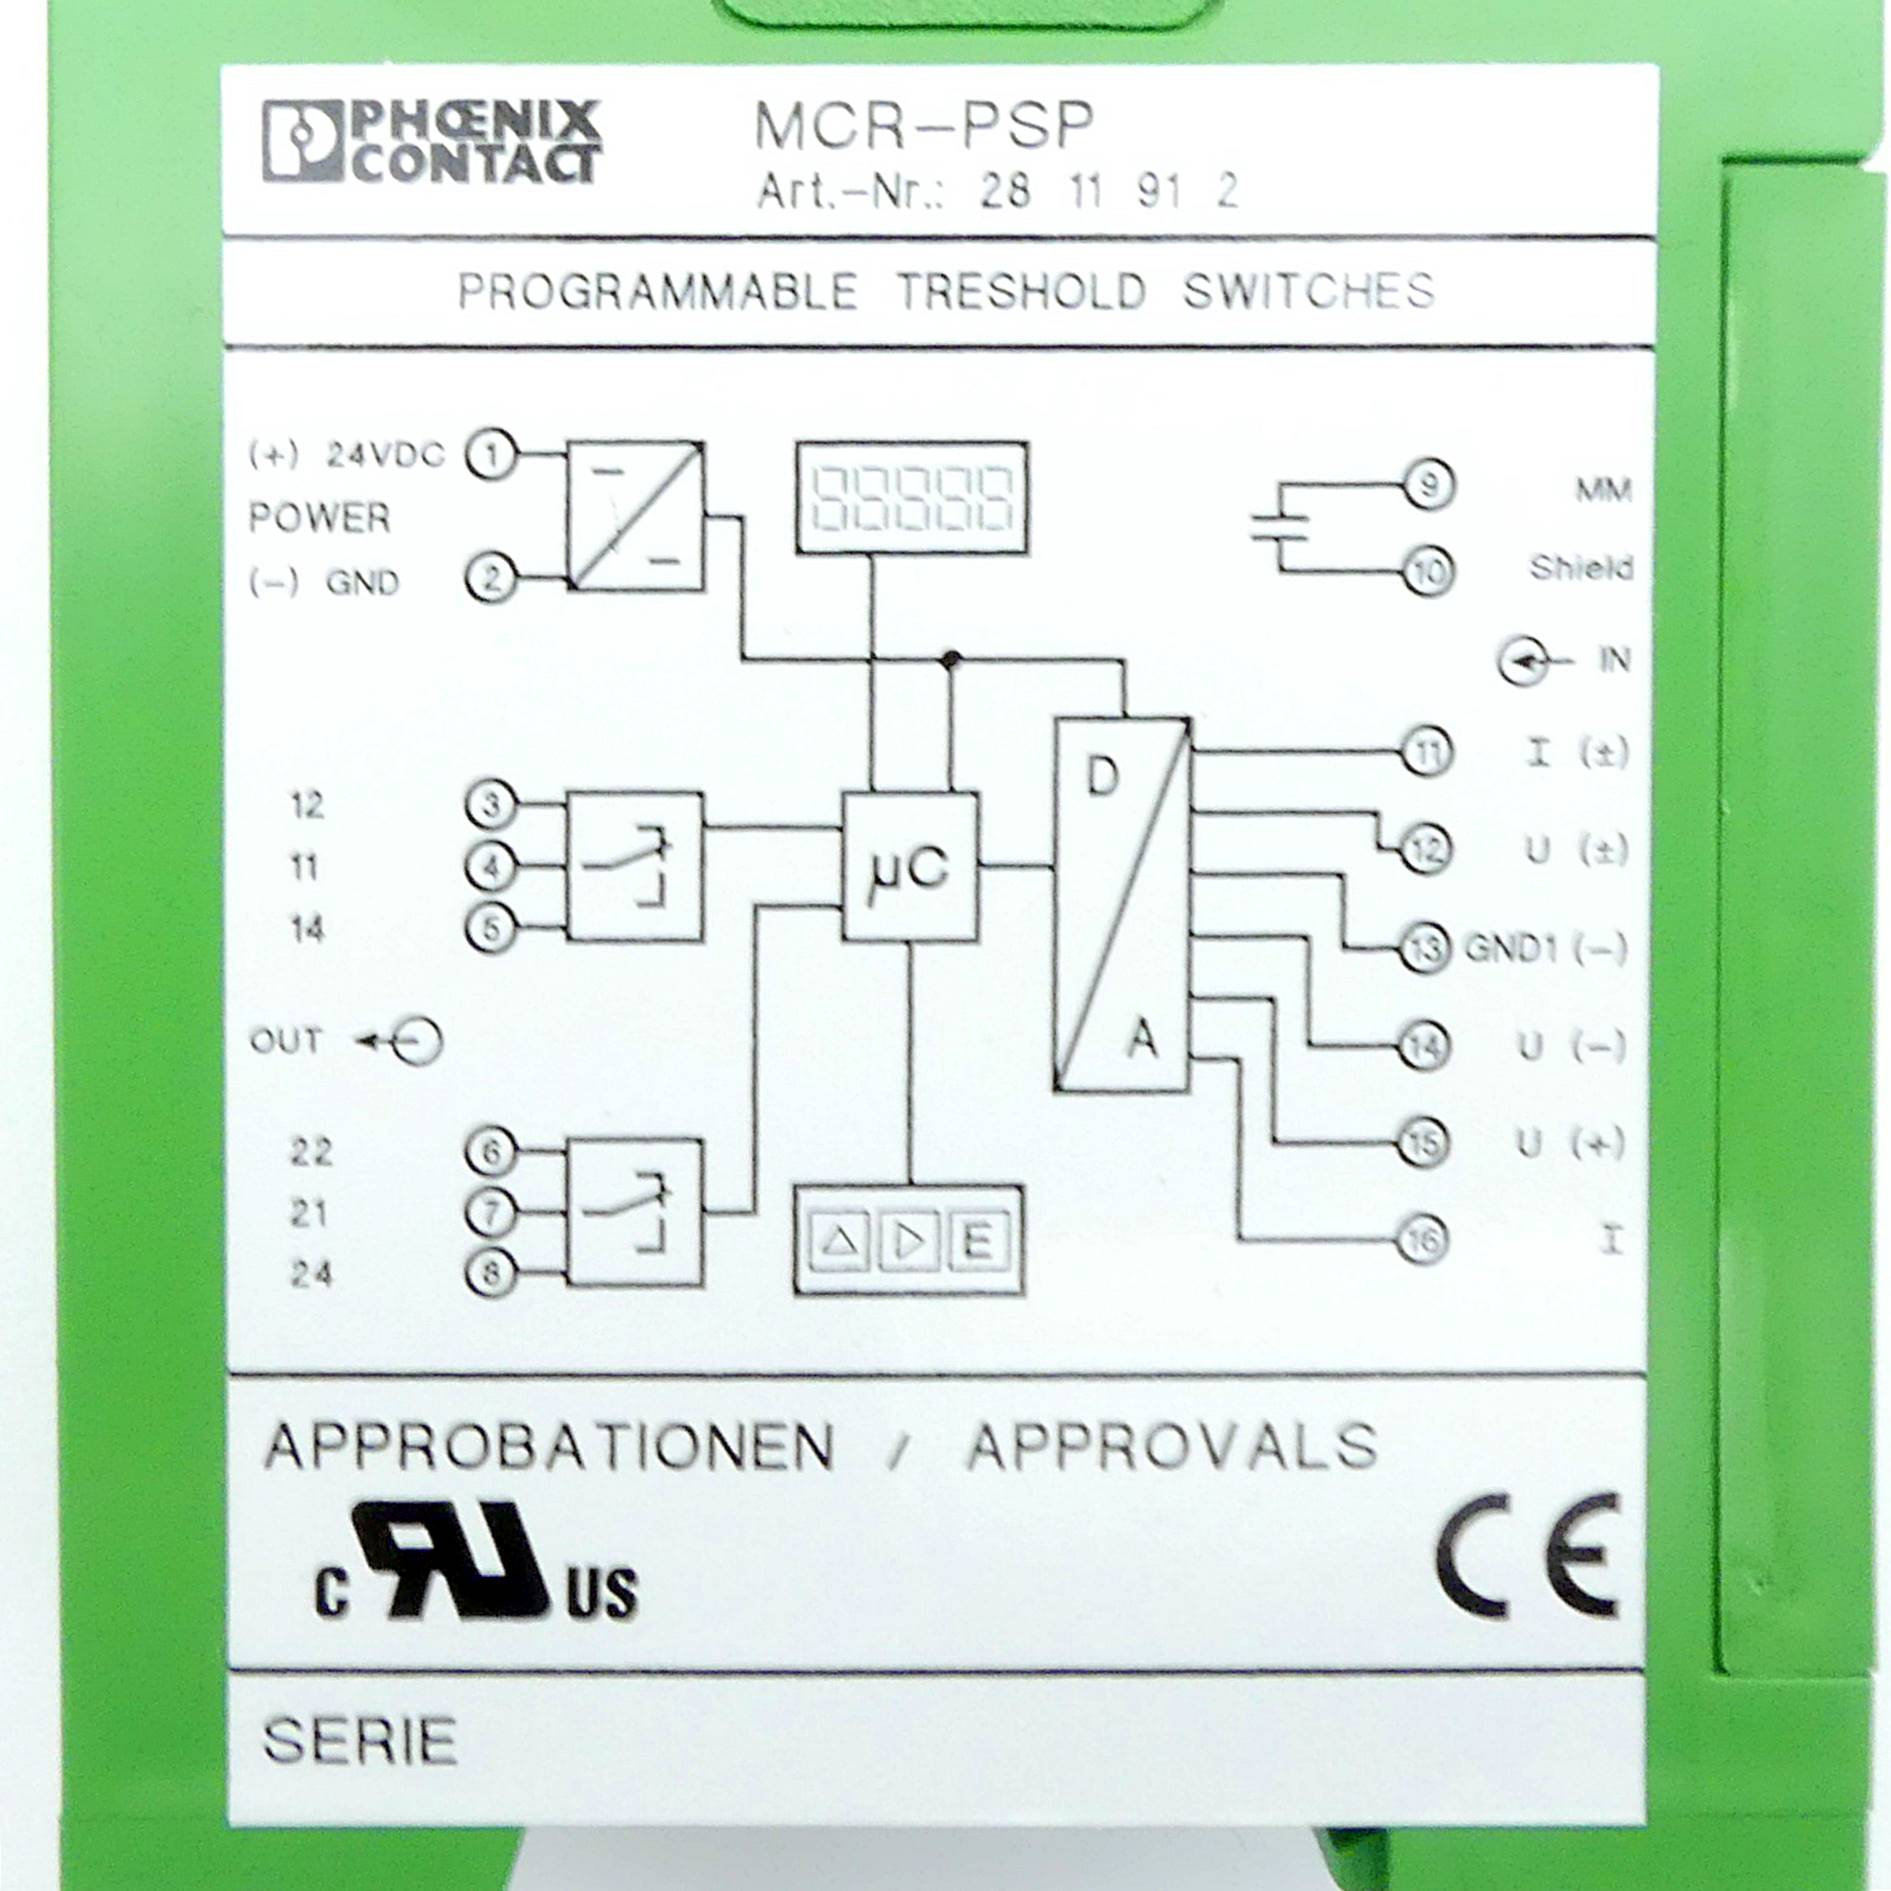 Limit switch MCR-PSP 2811912 